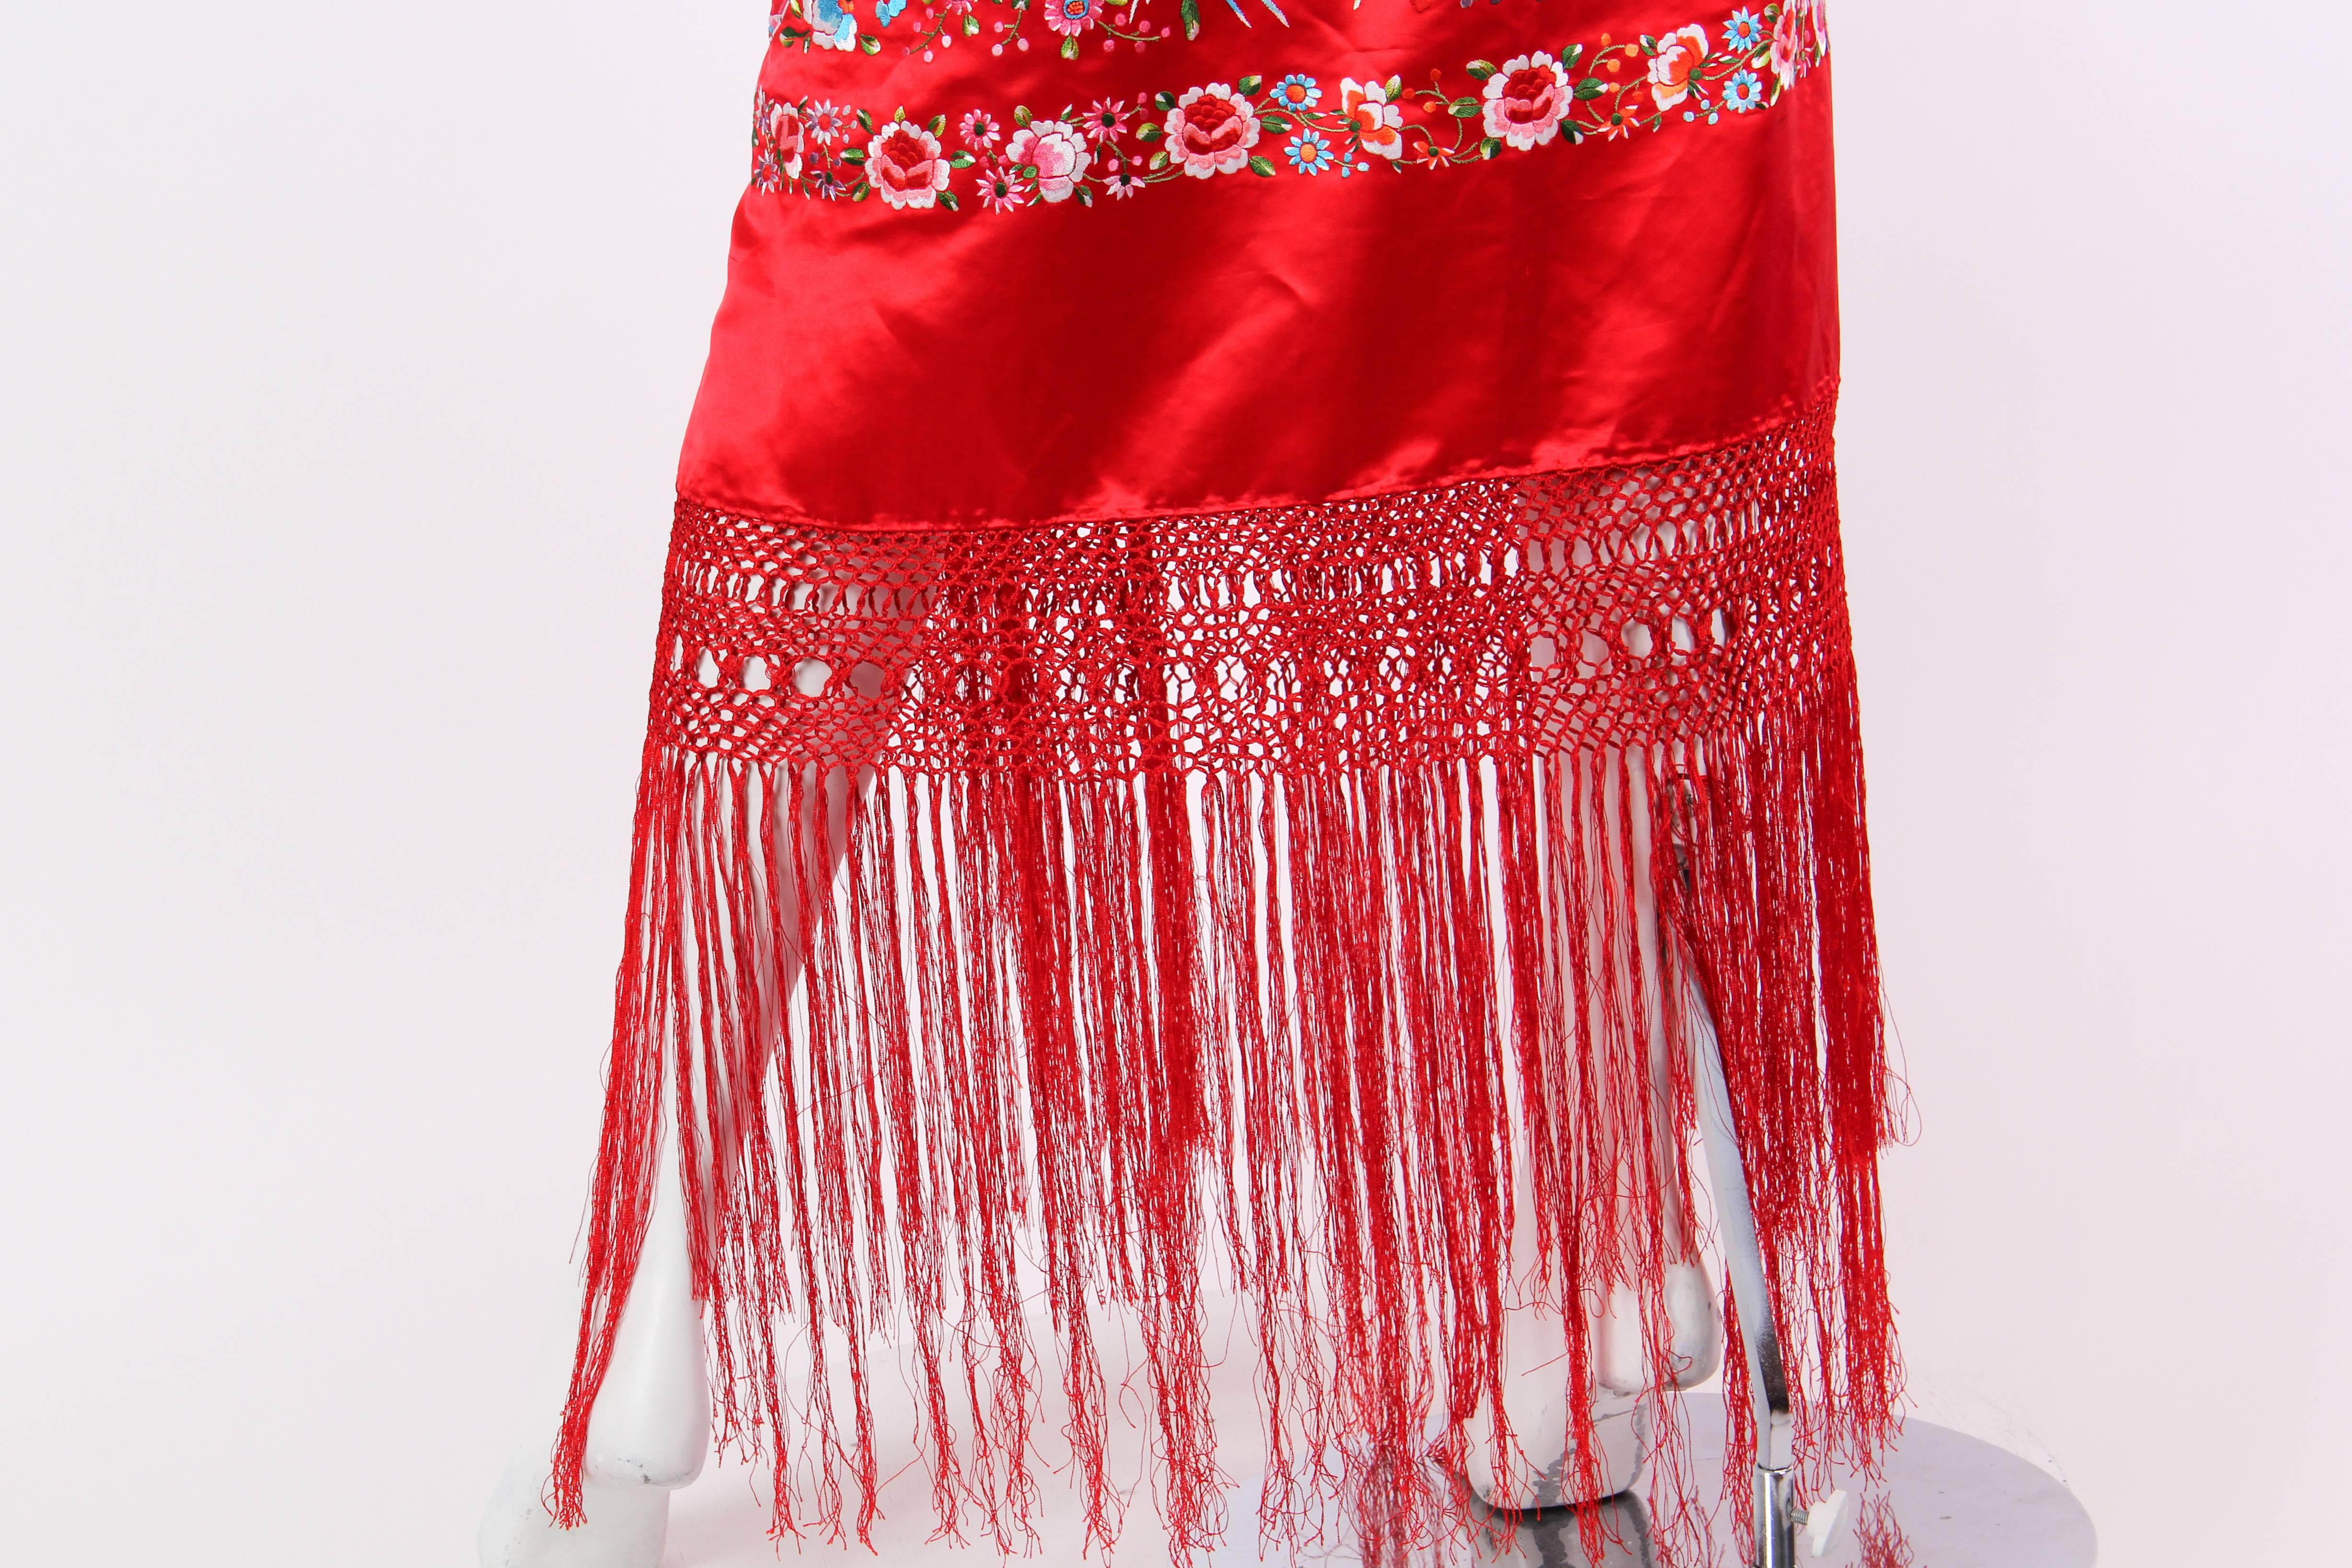 Phenomenal Hand-Embroidered Chinese Shawl Dress with Fringe 5